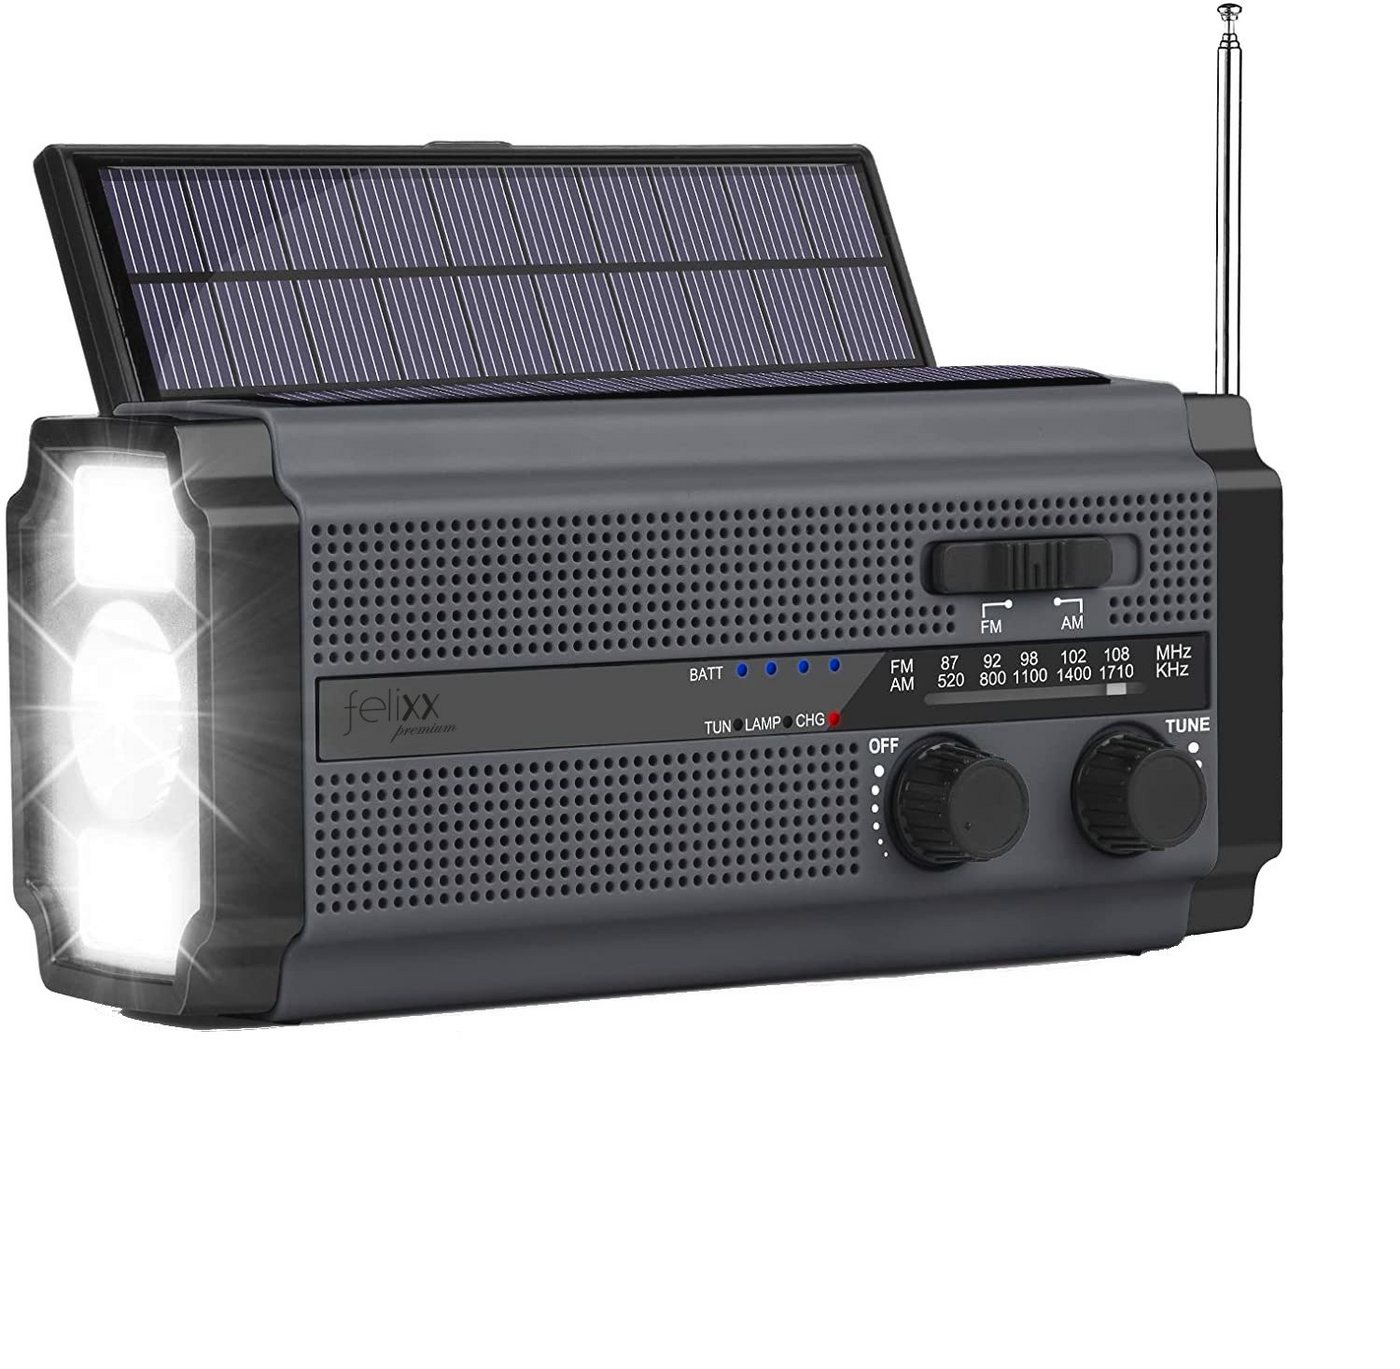 felixx Premium Powerbank + Black Out Radio RDS320 Powerbank felixx Premium Powerbank + Black Out Radio RDS320 4500 mAh von Felixx